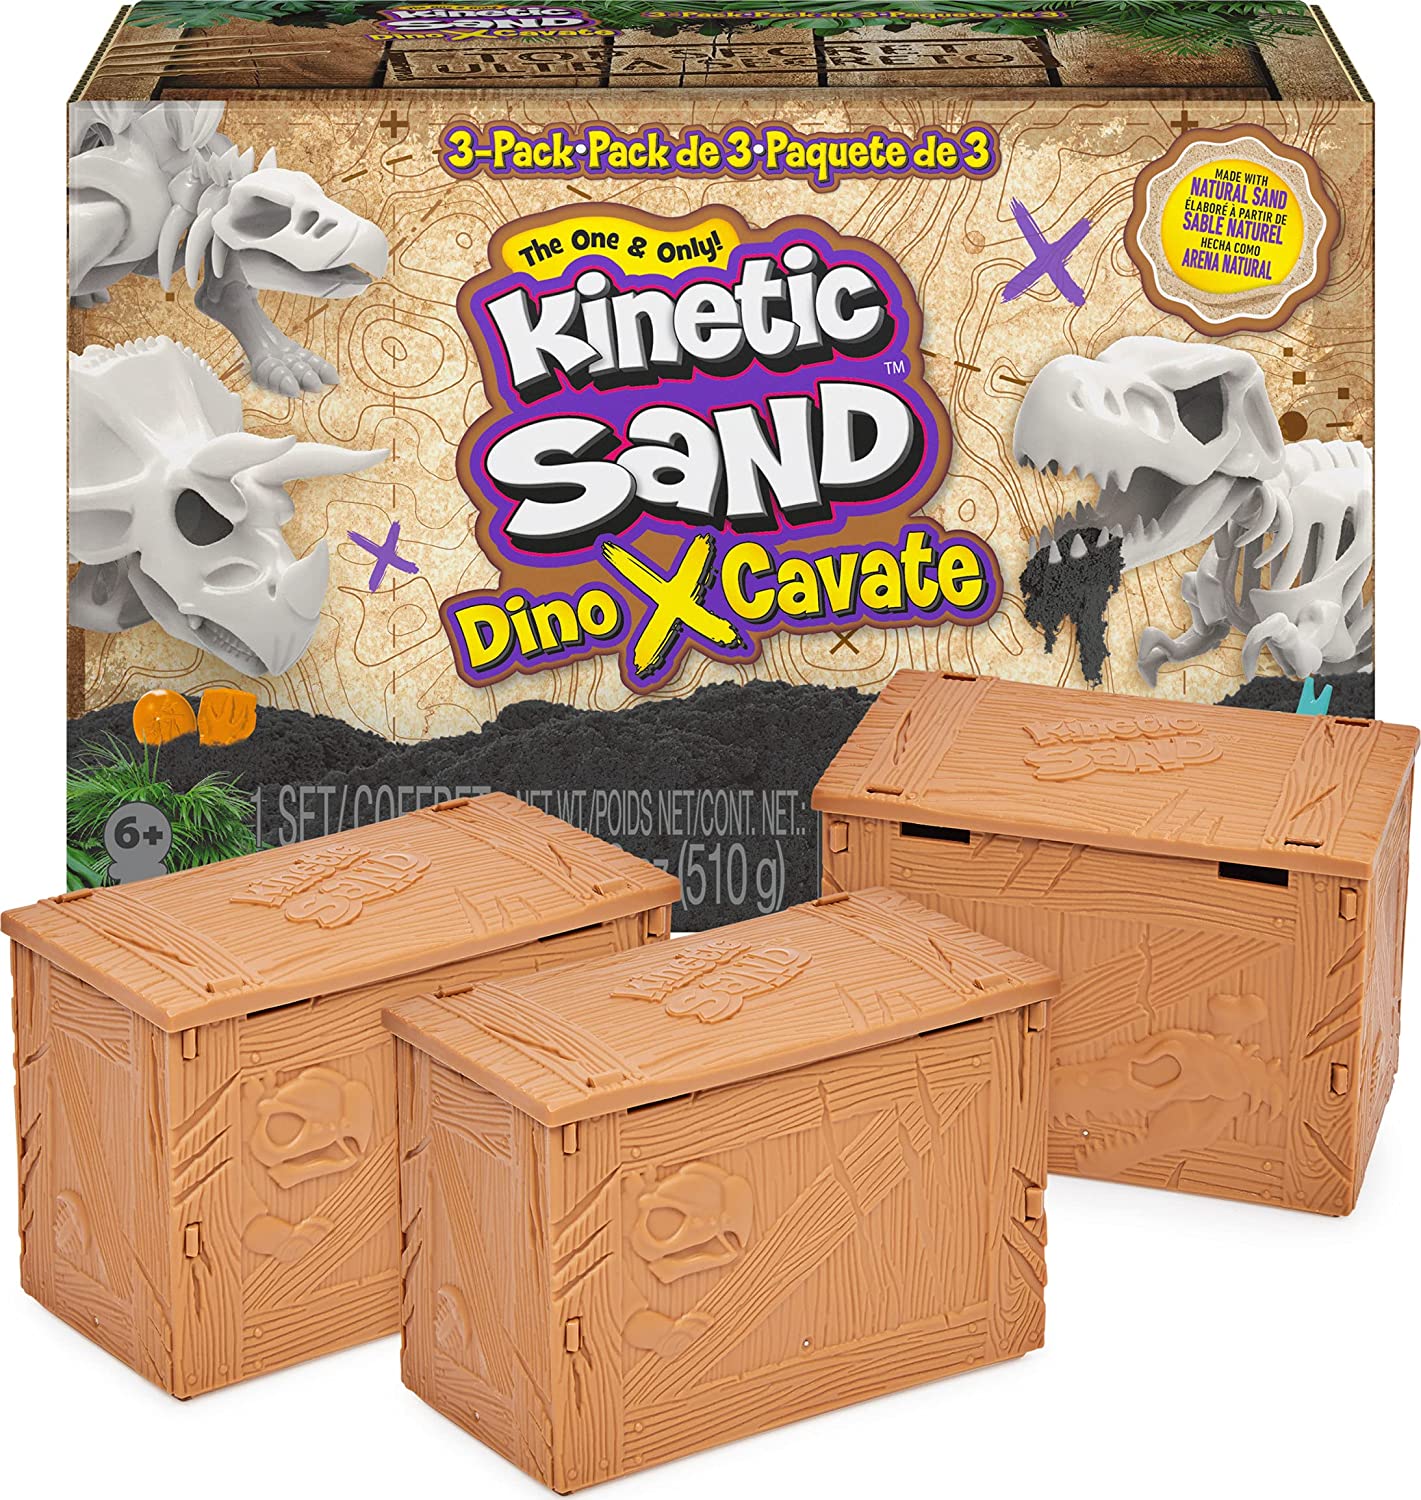 Kinetic Sand Dino XCavate 3 pack